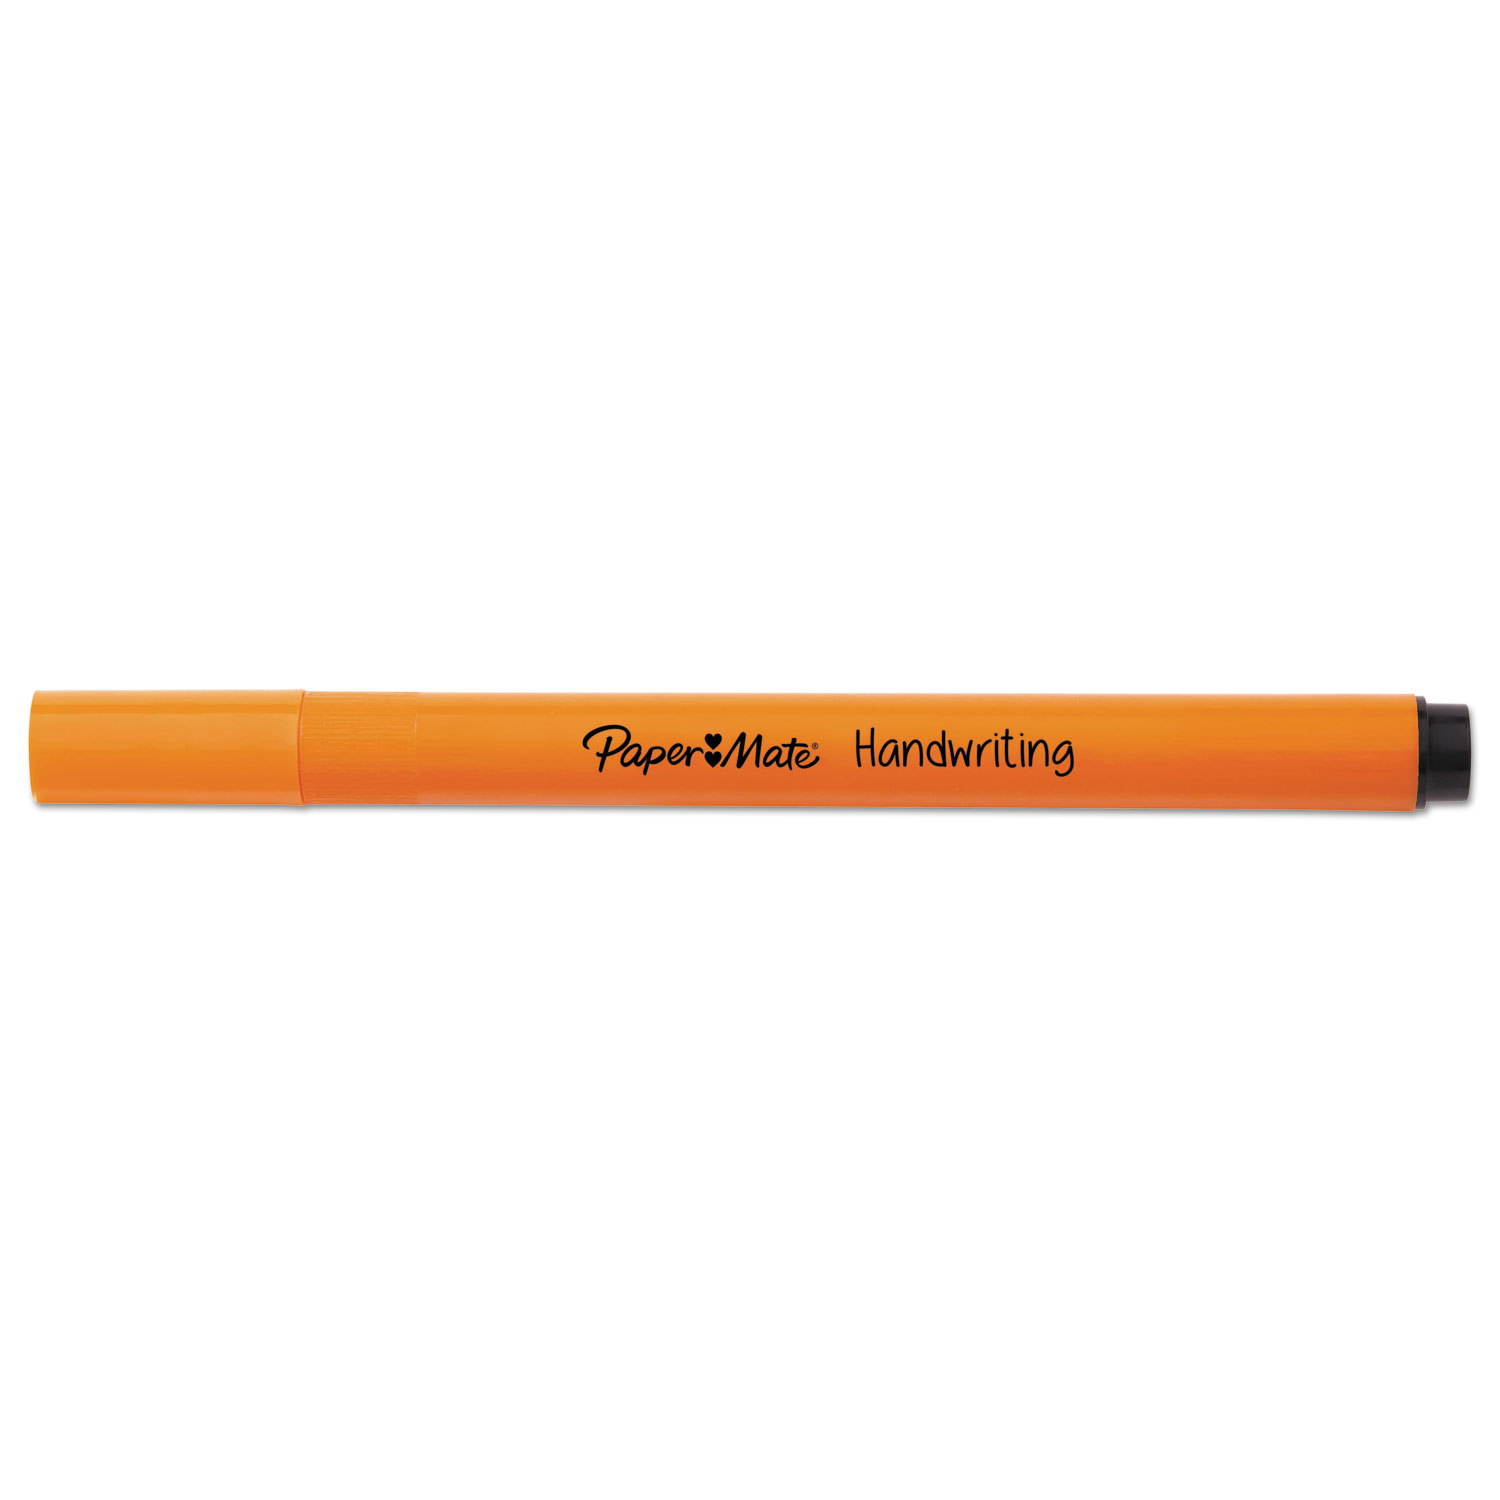 Handwriting Round Pens, Medium, 0.6 mm, Black Ink, Orange Barrel, 1 Dozen